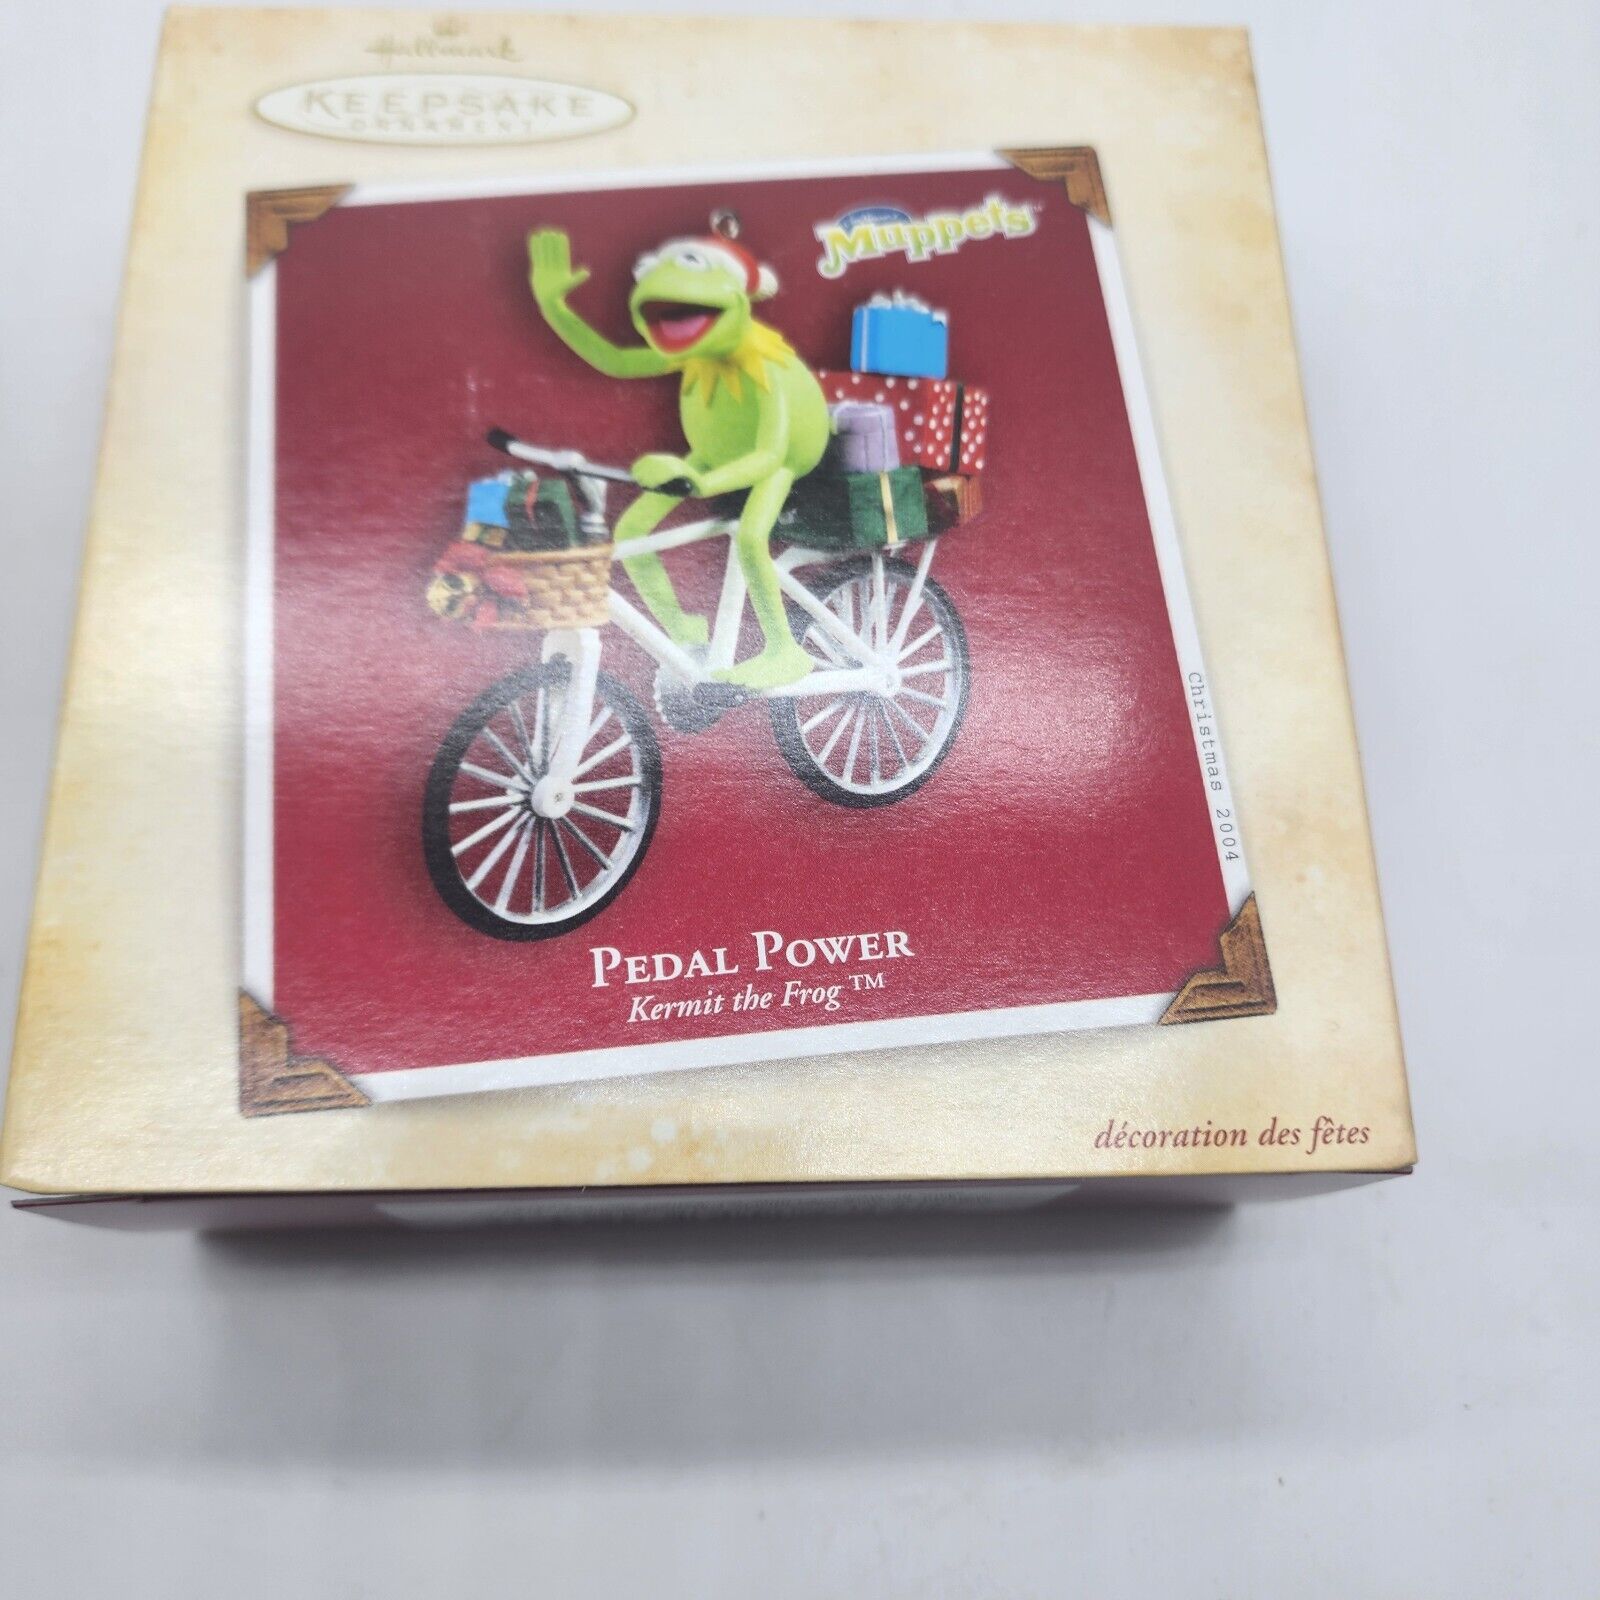 NEW IN BOX 2004 Hallmark Keepsake Ornament Muppets Kermit the Frog Pedal Power